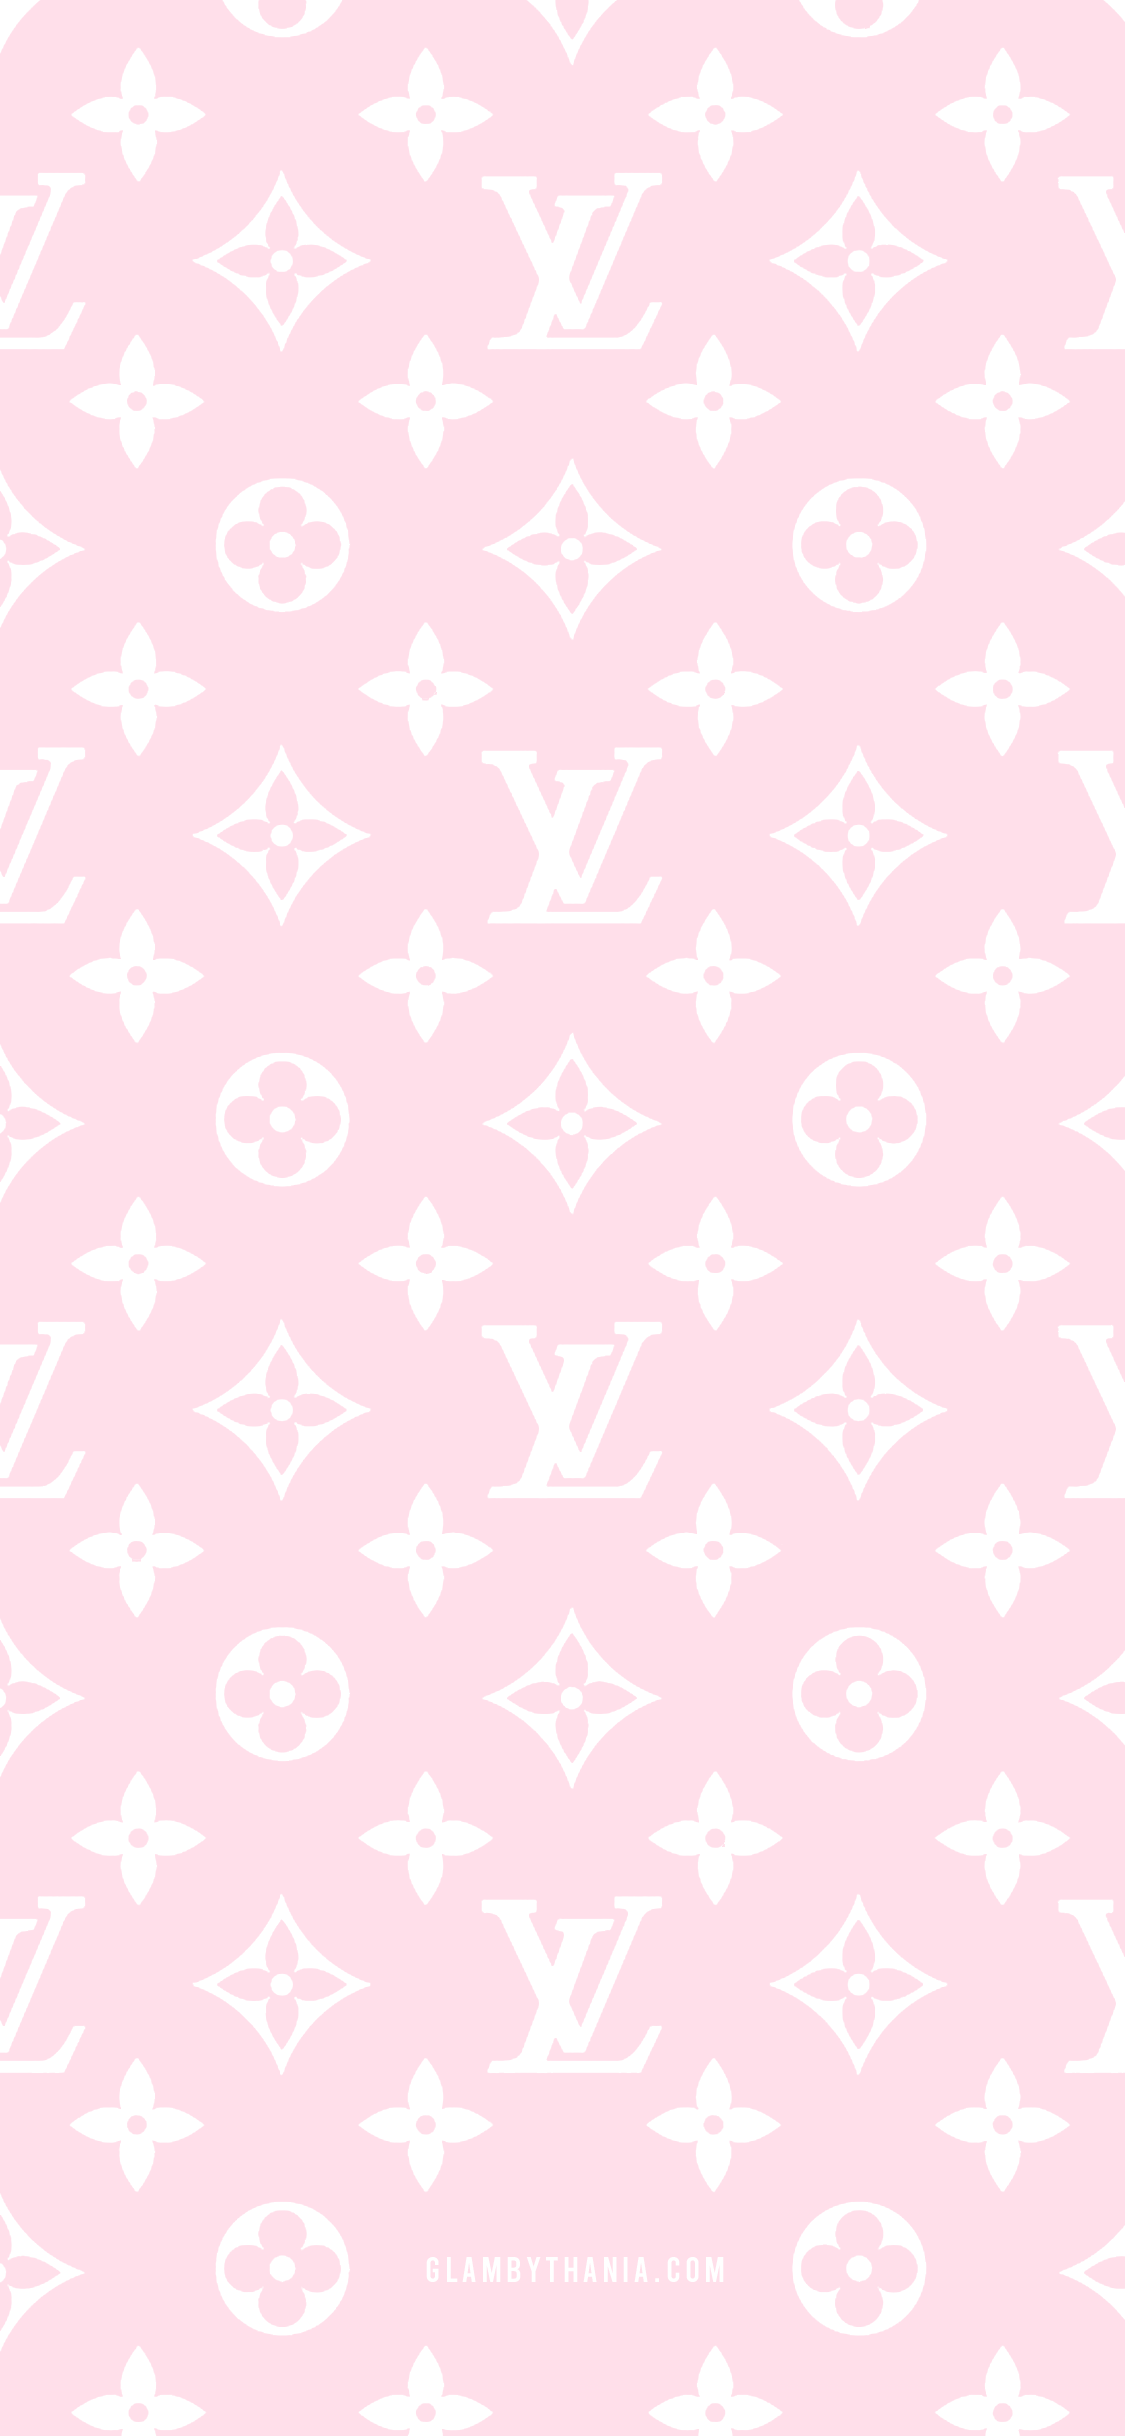 FREE Designer Girly Pink iPhone Wallpaper. Pink wallpaper girly, iPhone wallpaper girly, Pink wallpaper background